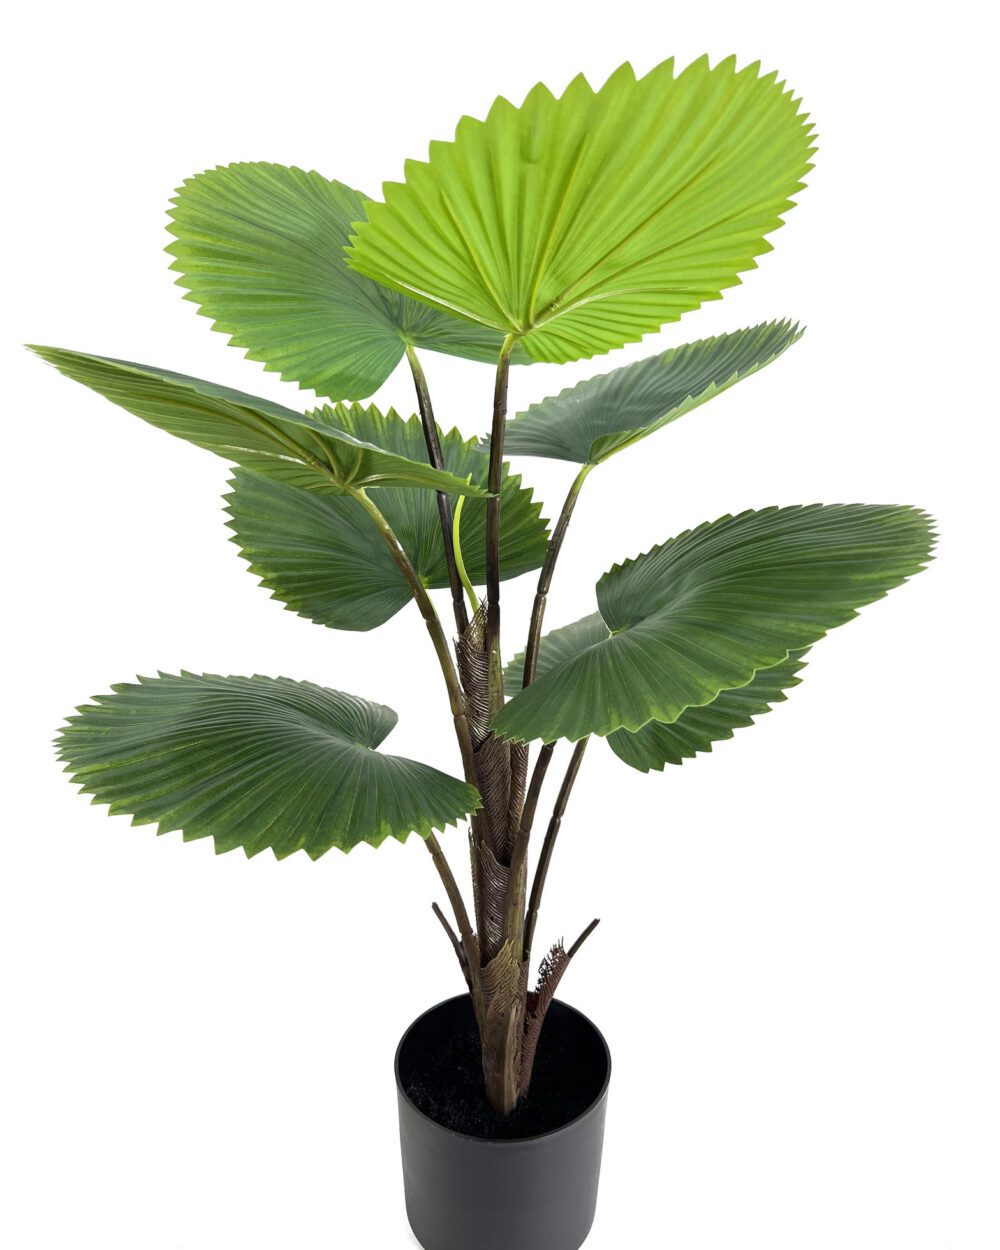 Buy Artificial Circular Fan Palm Plant From Wholesaler 2.5 Feet - Fourwalls